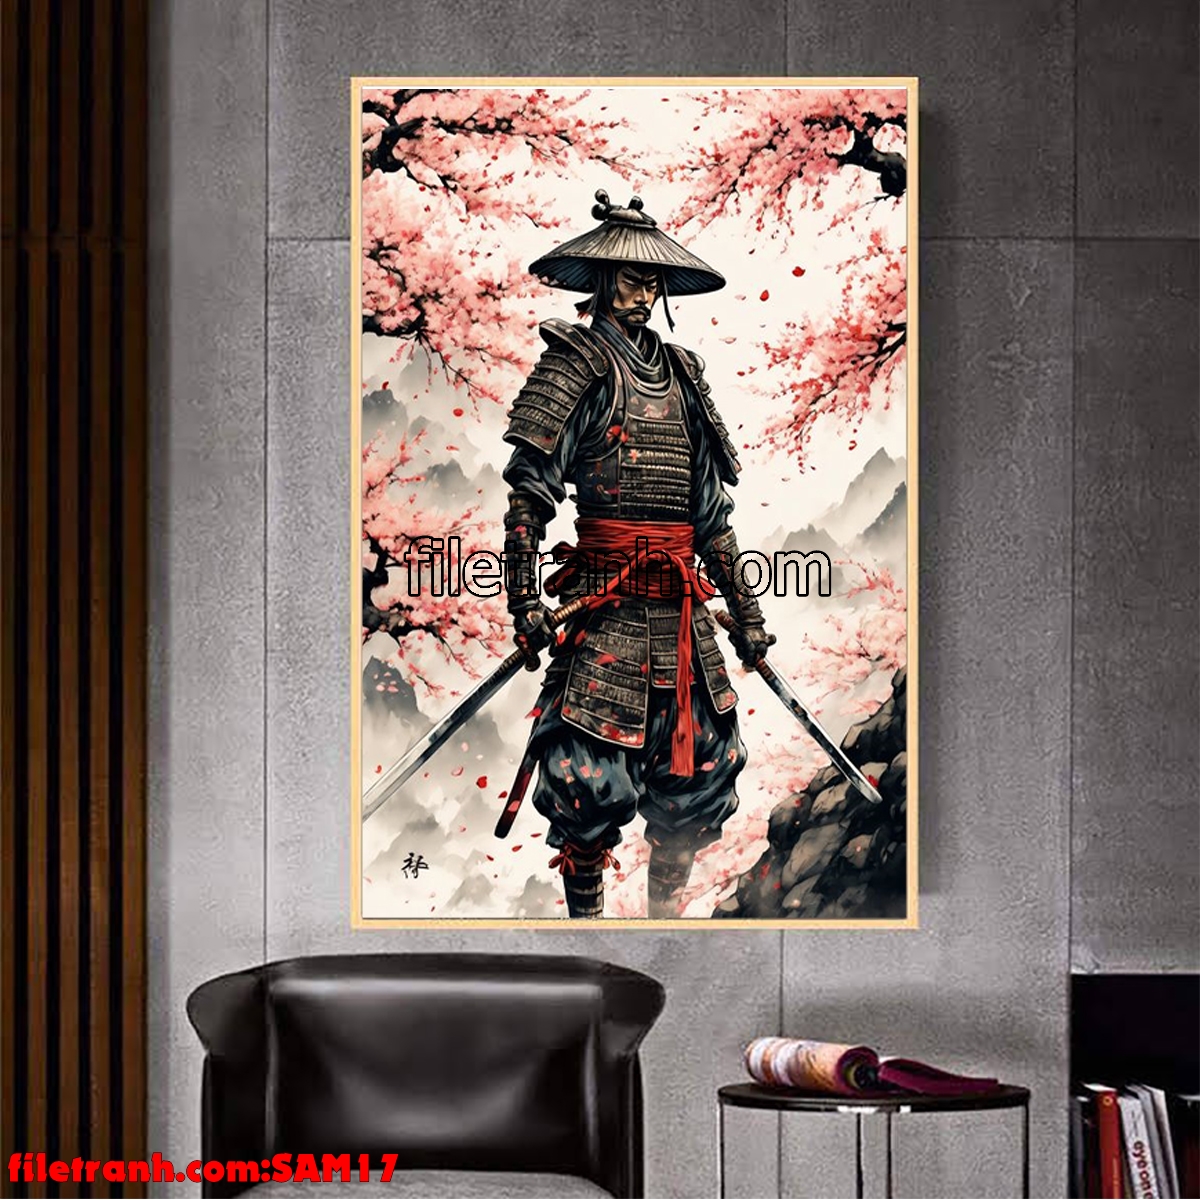 https://filetranh.com/tuong-nen/file-tranh-samurai-vo-si-nhat-ban-sam17.html